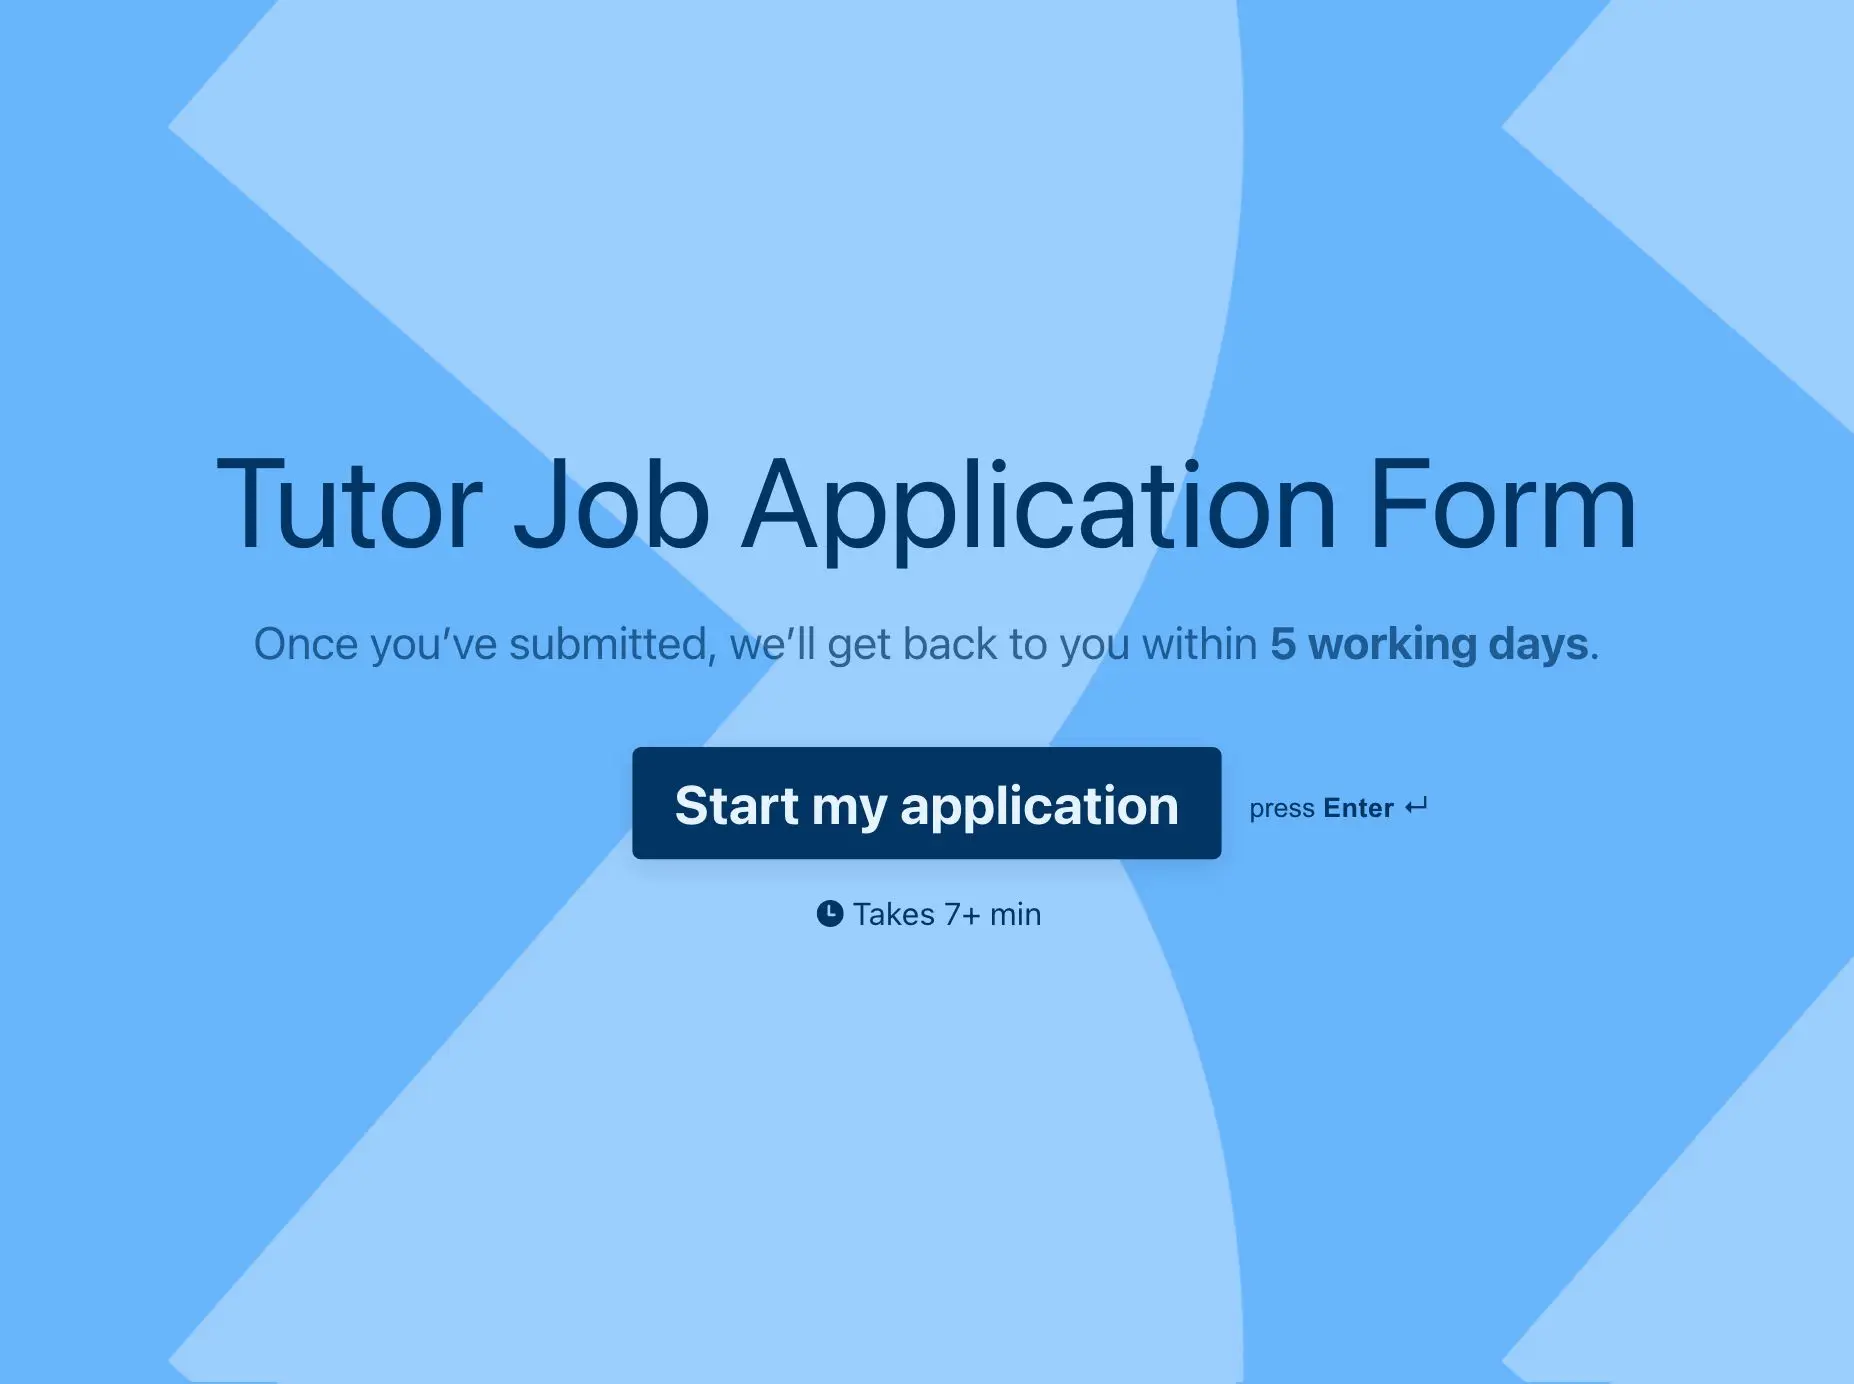 Tutor Job Application Form Template Hero